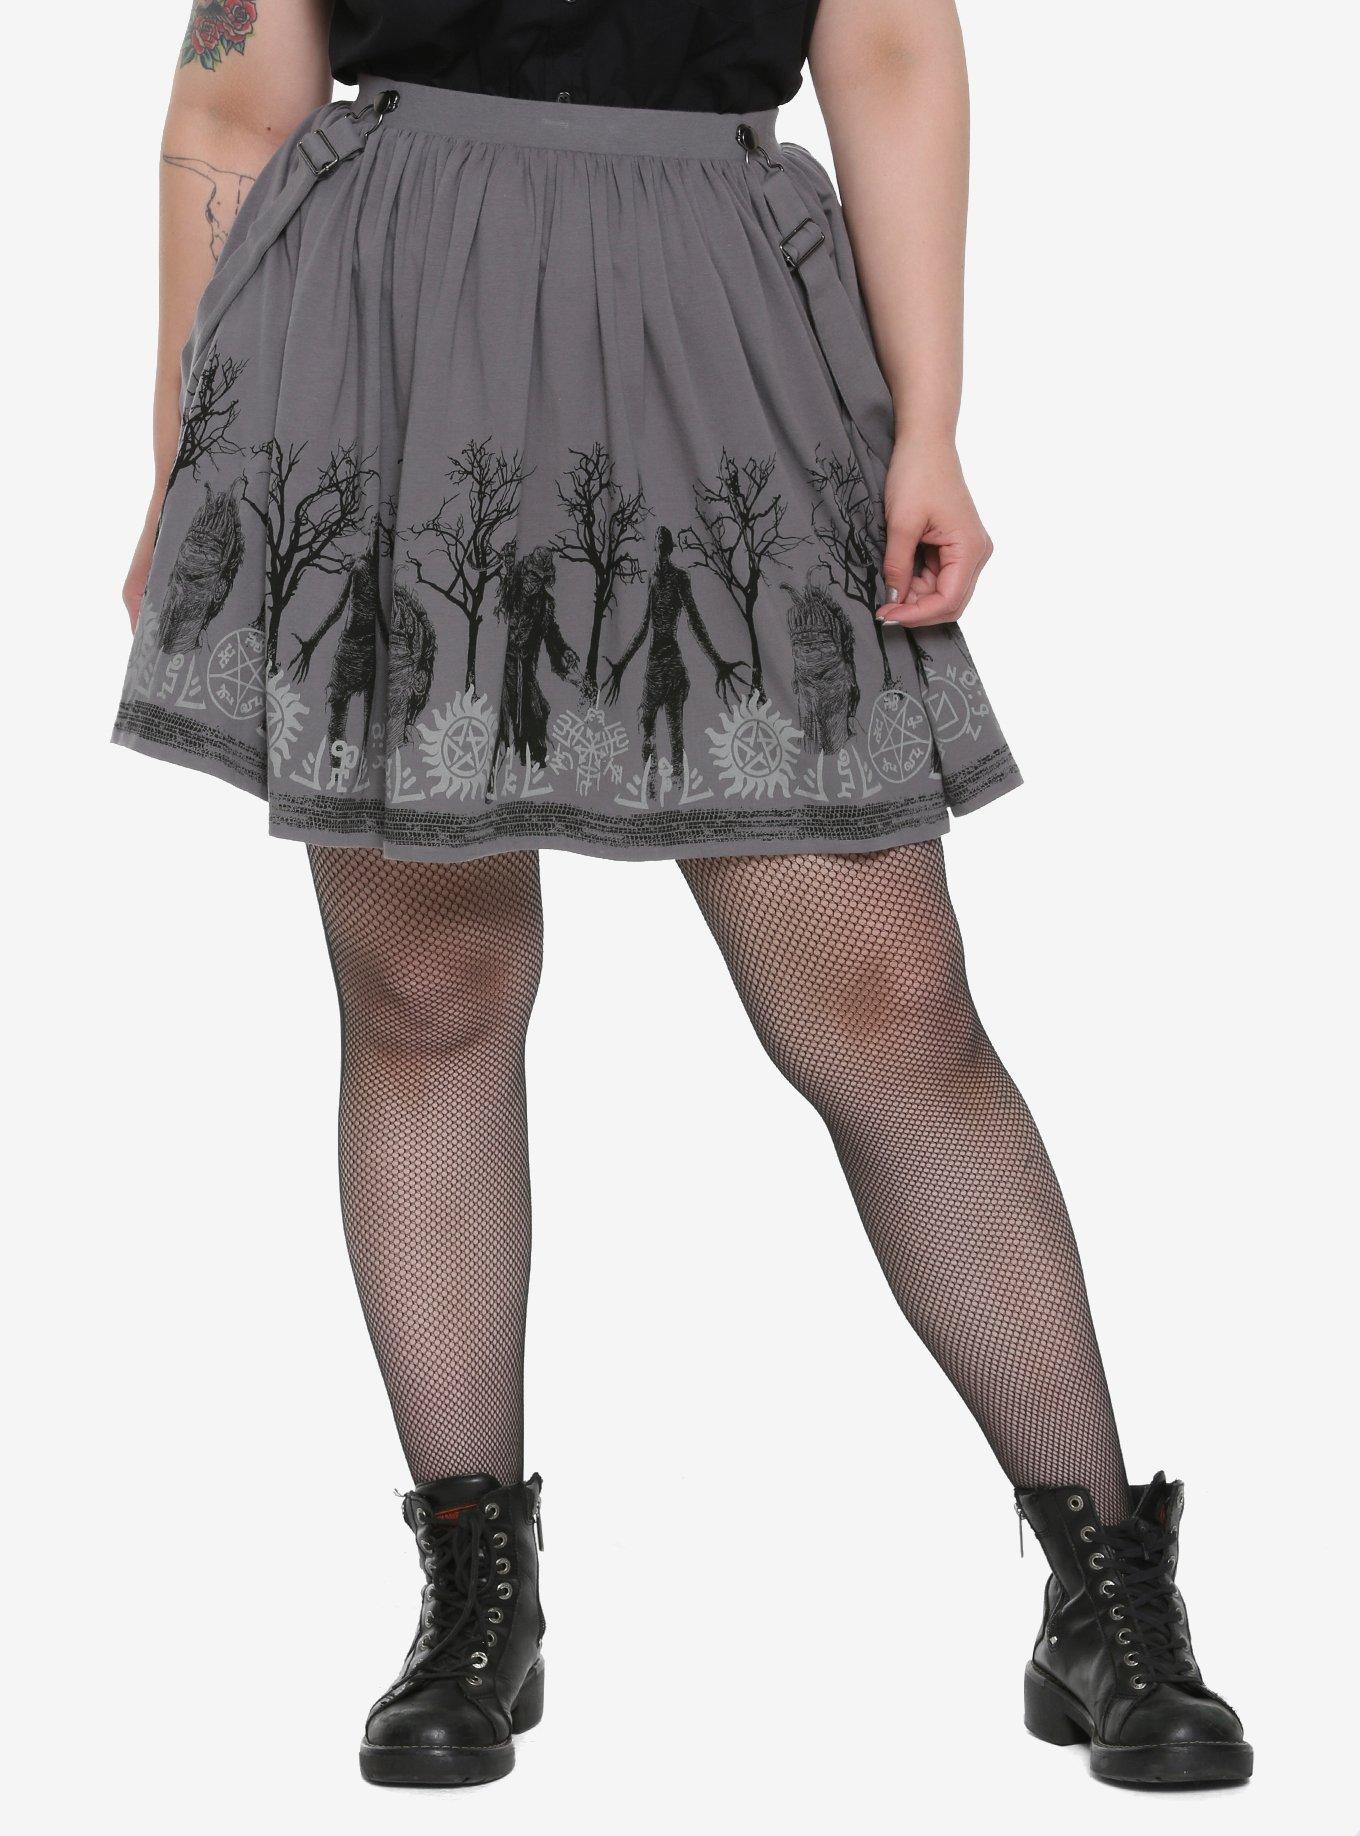 Supernatural Monsters Suspender Skirt Plus Size Hot Topic Exclusive, GREY, hi-res